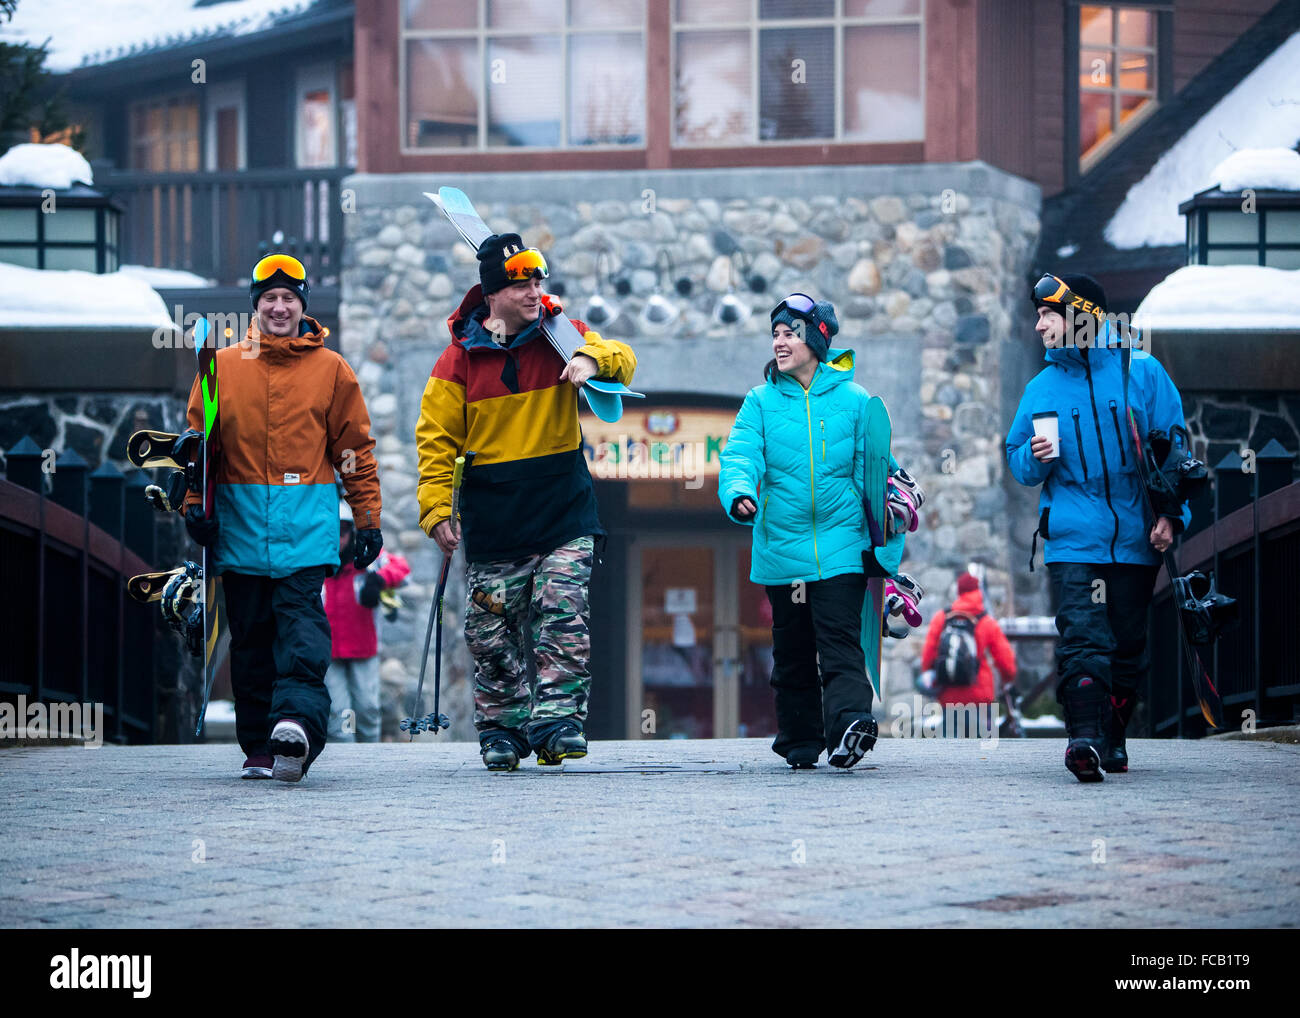 Athletes walking in Ski Resort Base Area Stock Photo